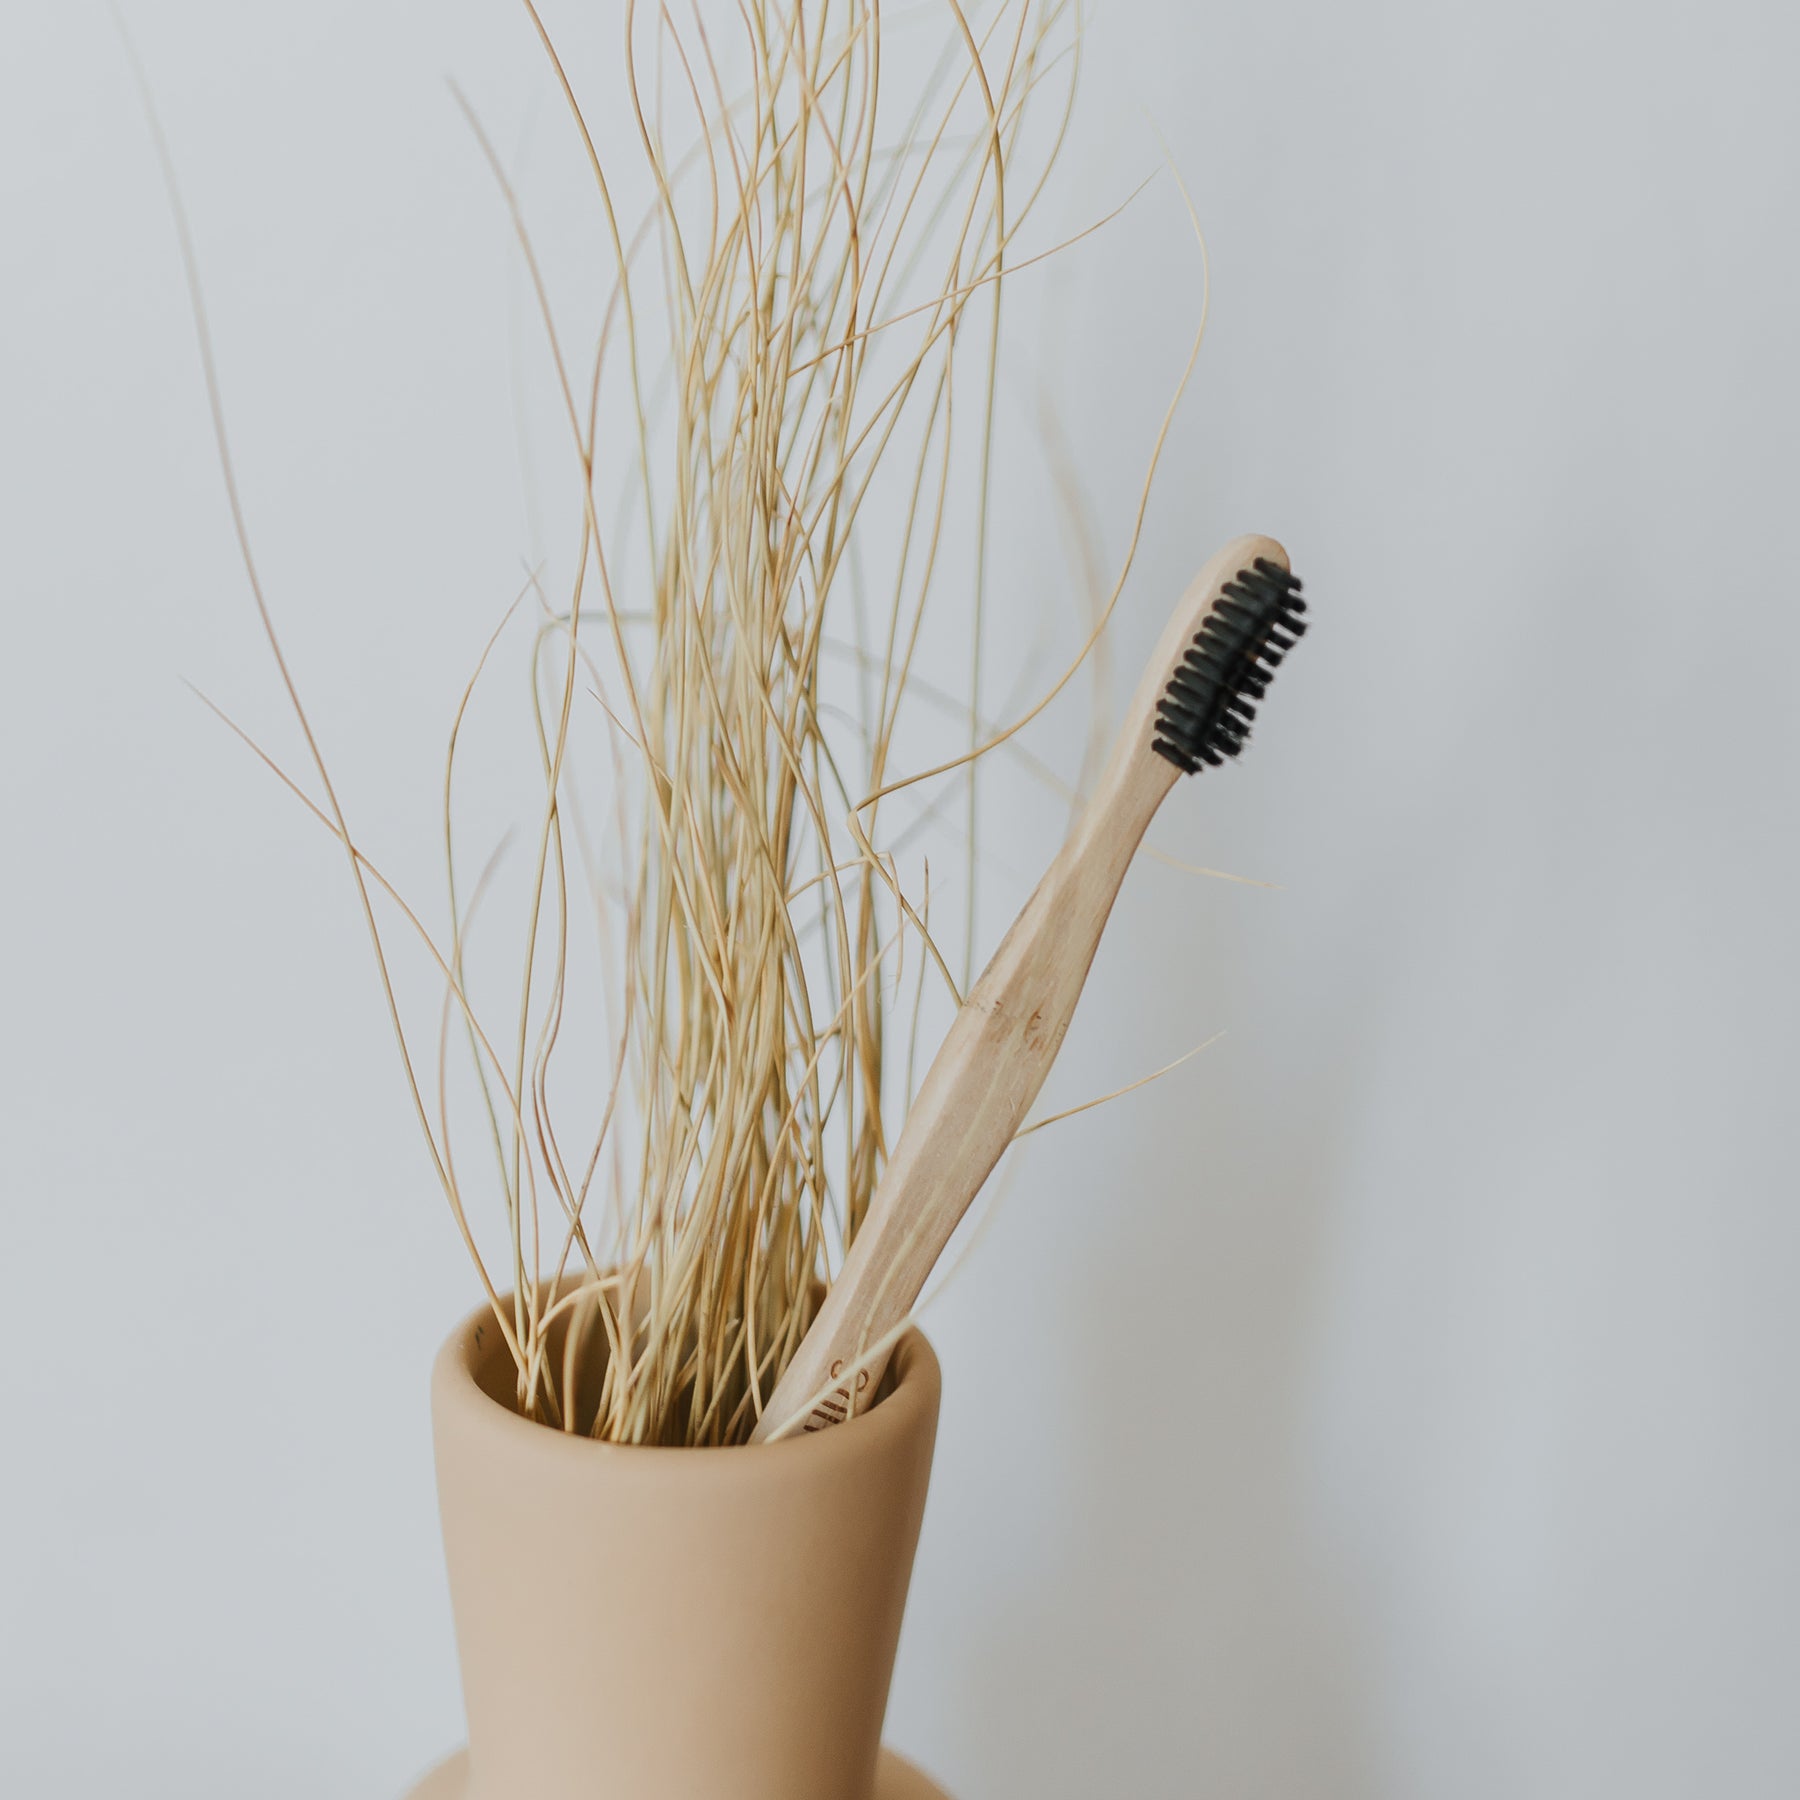 Dentarius naturelle support brosse à dents en bambou